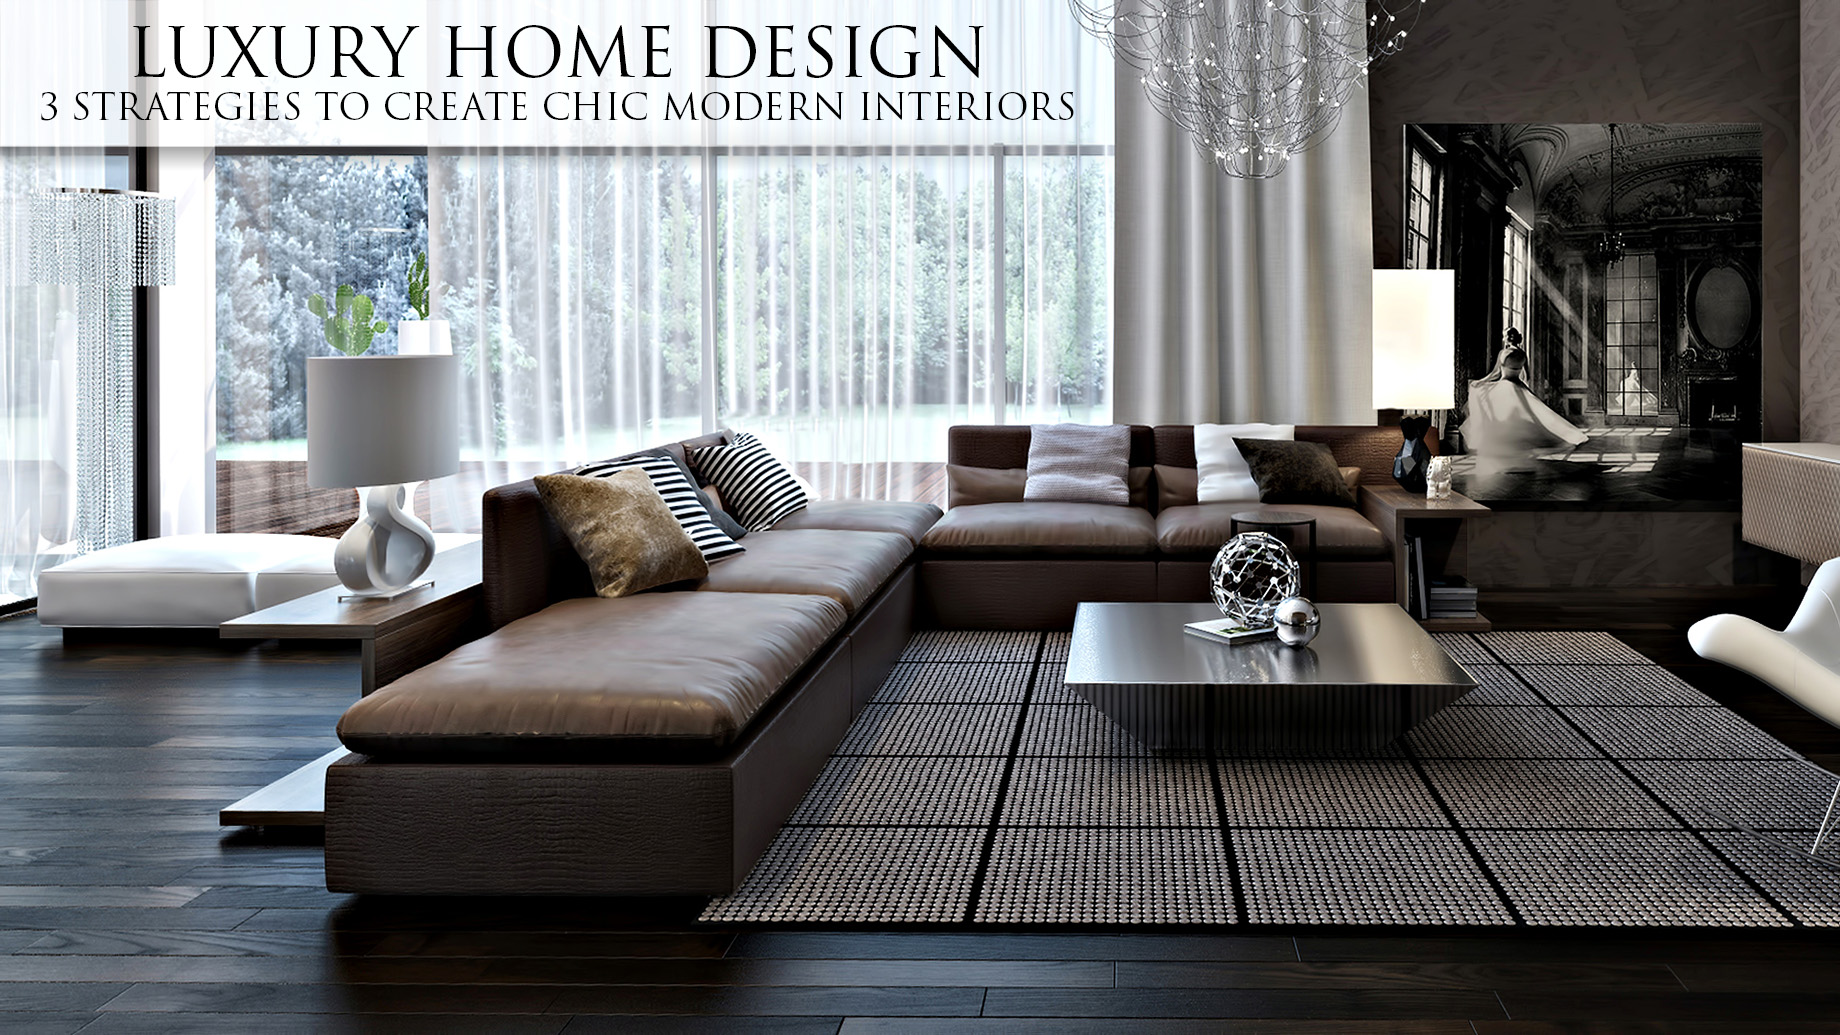 Luxury Home Design - 3 Strategies to Create Chic Modern Interiors